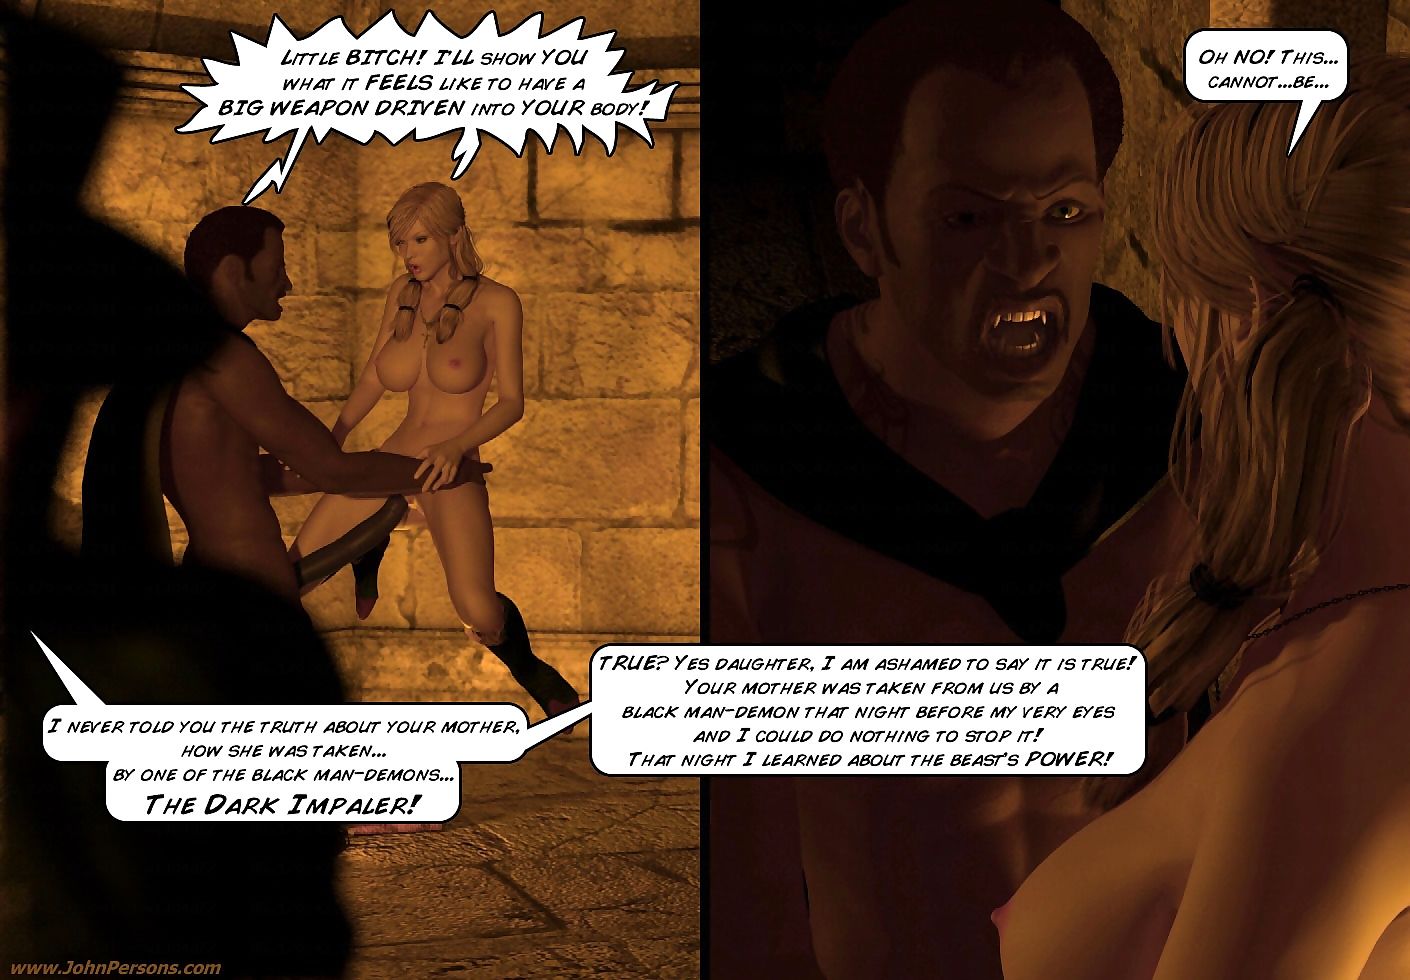 Vampir slayer John Personen page 1